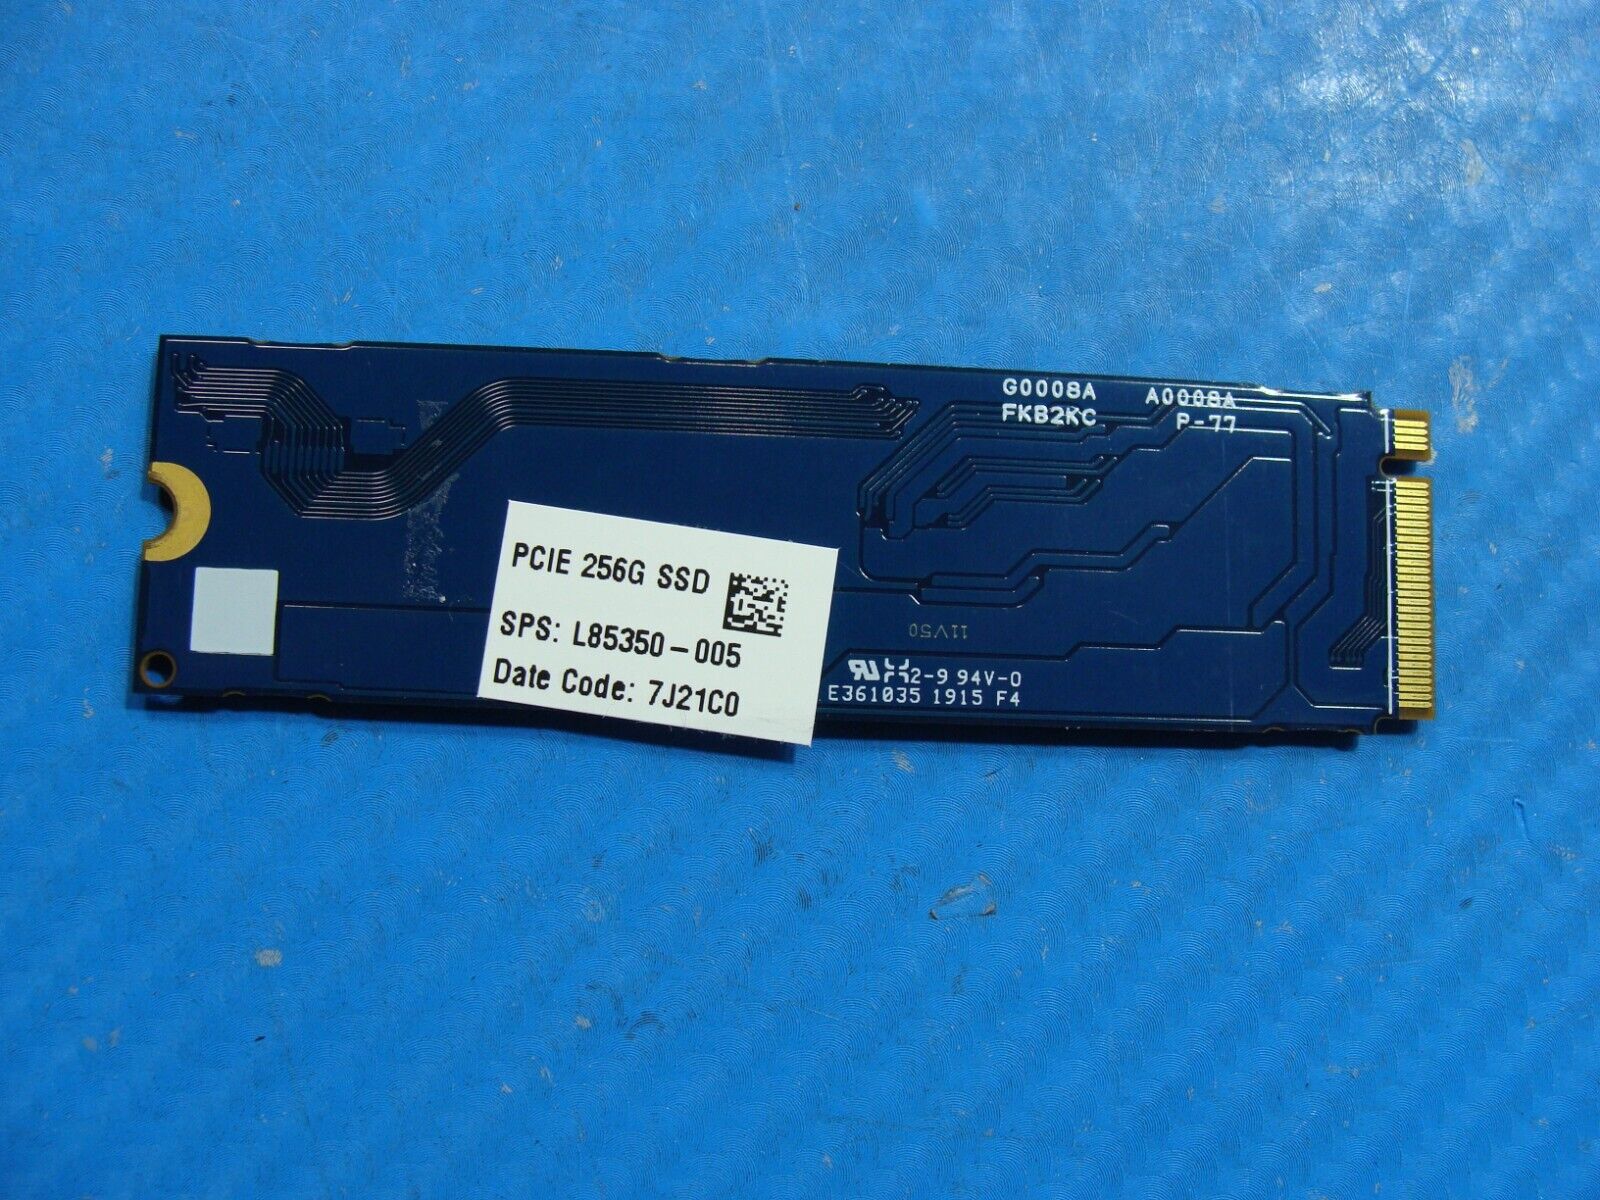 HP 1030 G7 Toshiba 256GB M.2 NVMe SSD Solid State Drive KXG60ZNV256G L38666-001